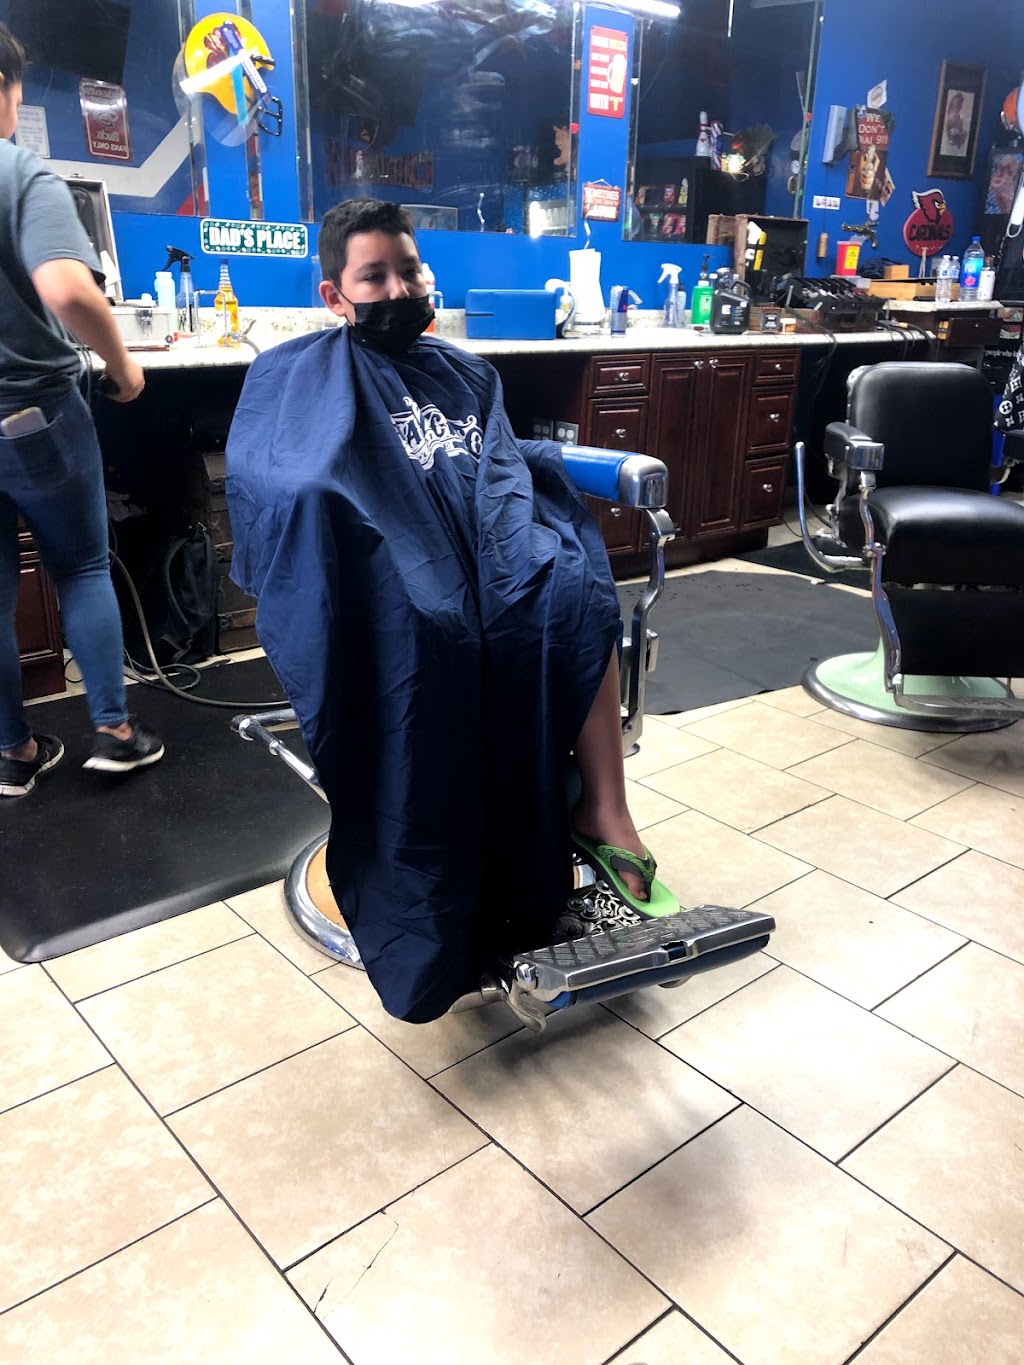 Petes Boss Cuts Barber Shop | 11 W Baseline Rd, Phoenix, AZ 85041, USA | Phone: (602) 800-2301